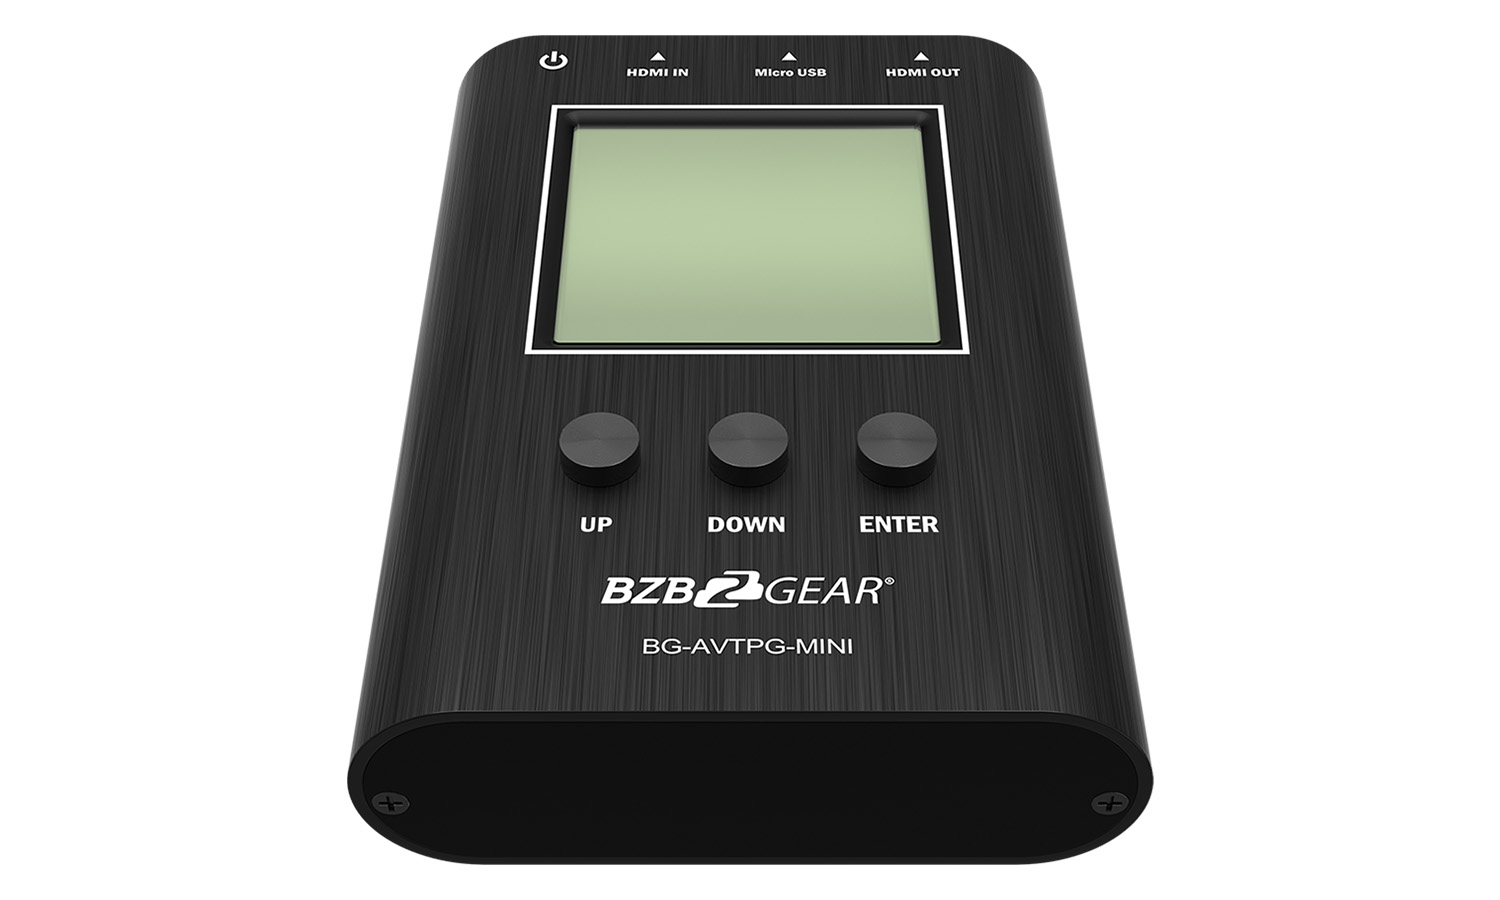 BG-AVTPG-MINI 1080P/4K UHD HDMI 2.0 18Gbps Portable Signal Test Generator/Analyzer by BZBGEAR